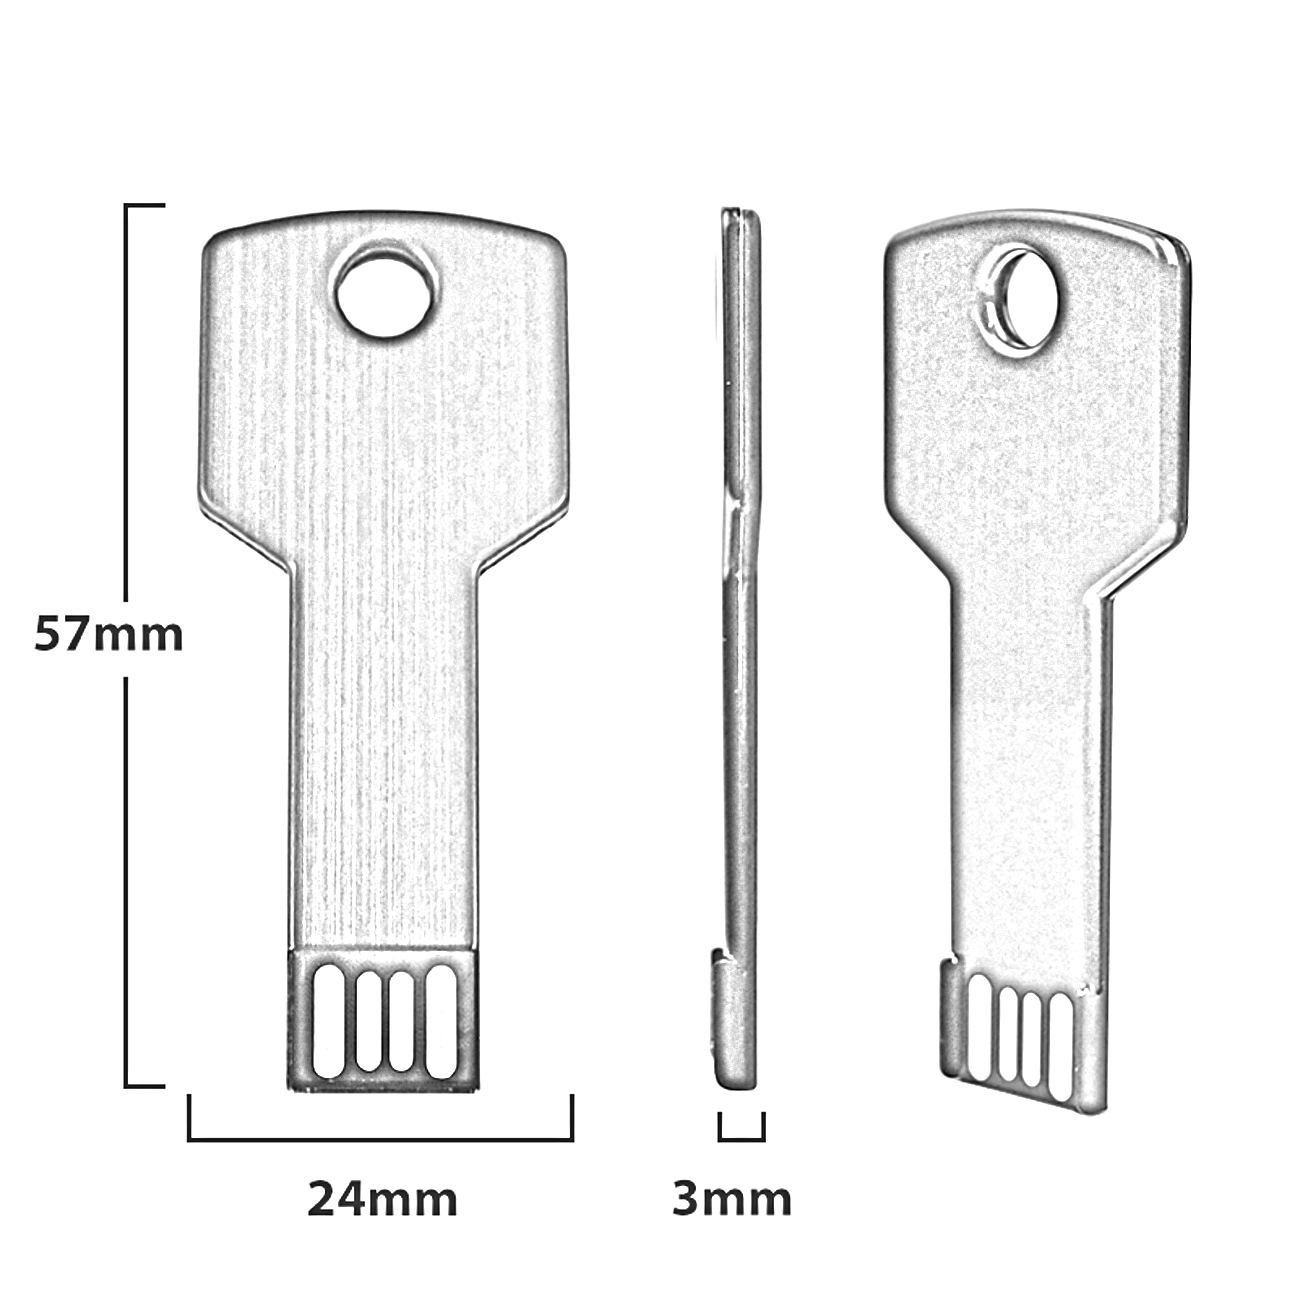 Grün 64GB Key USB-Stick (Grün, USB GERMANY 64 GB)